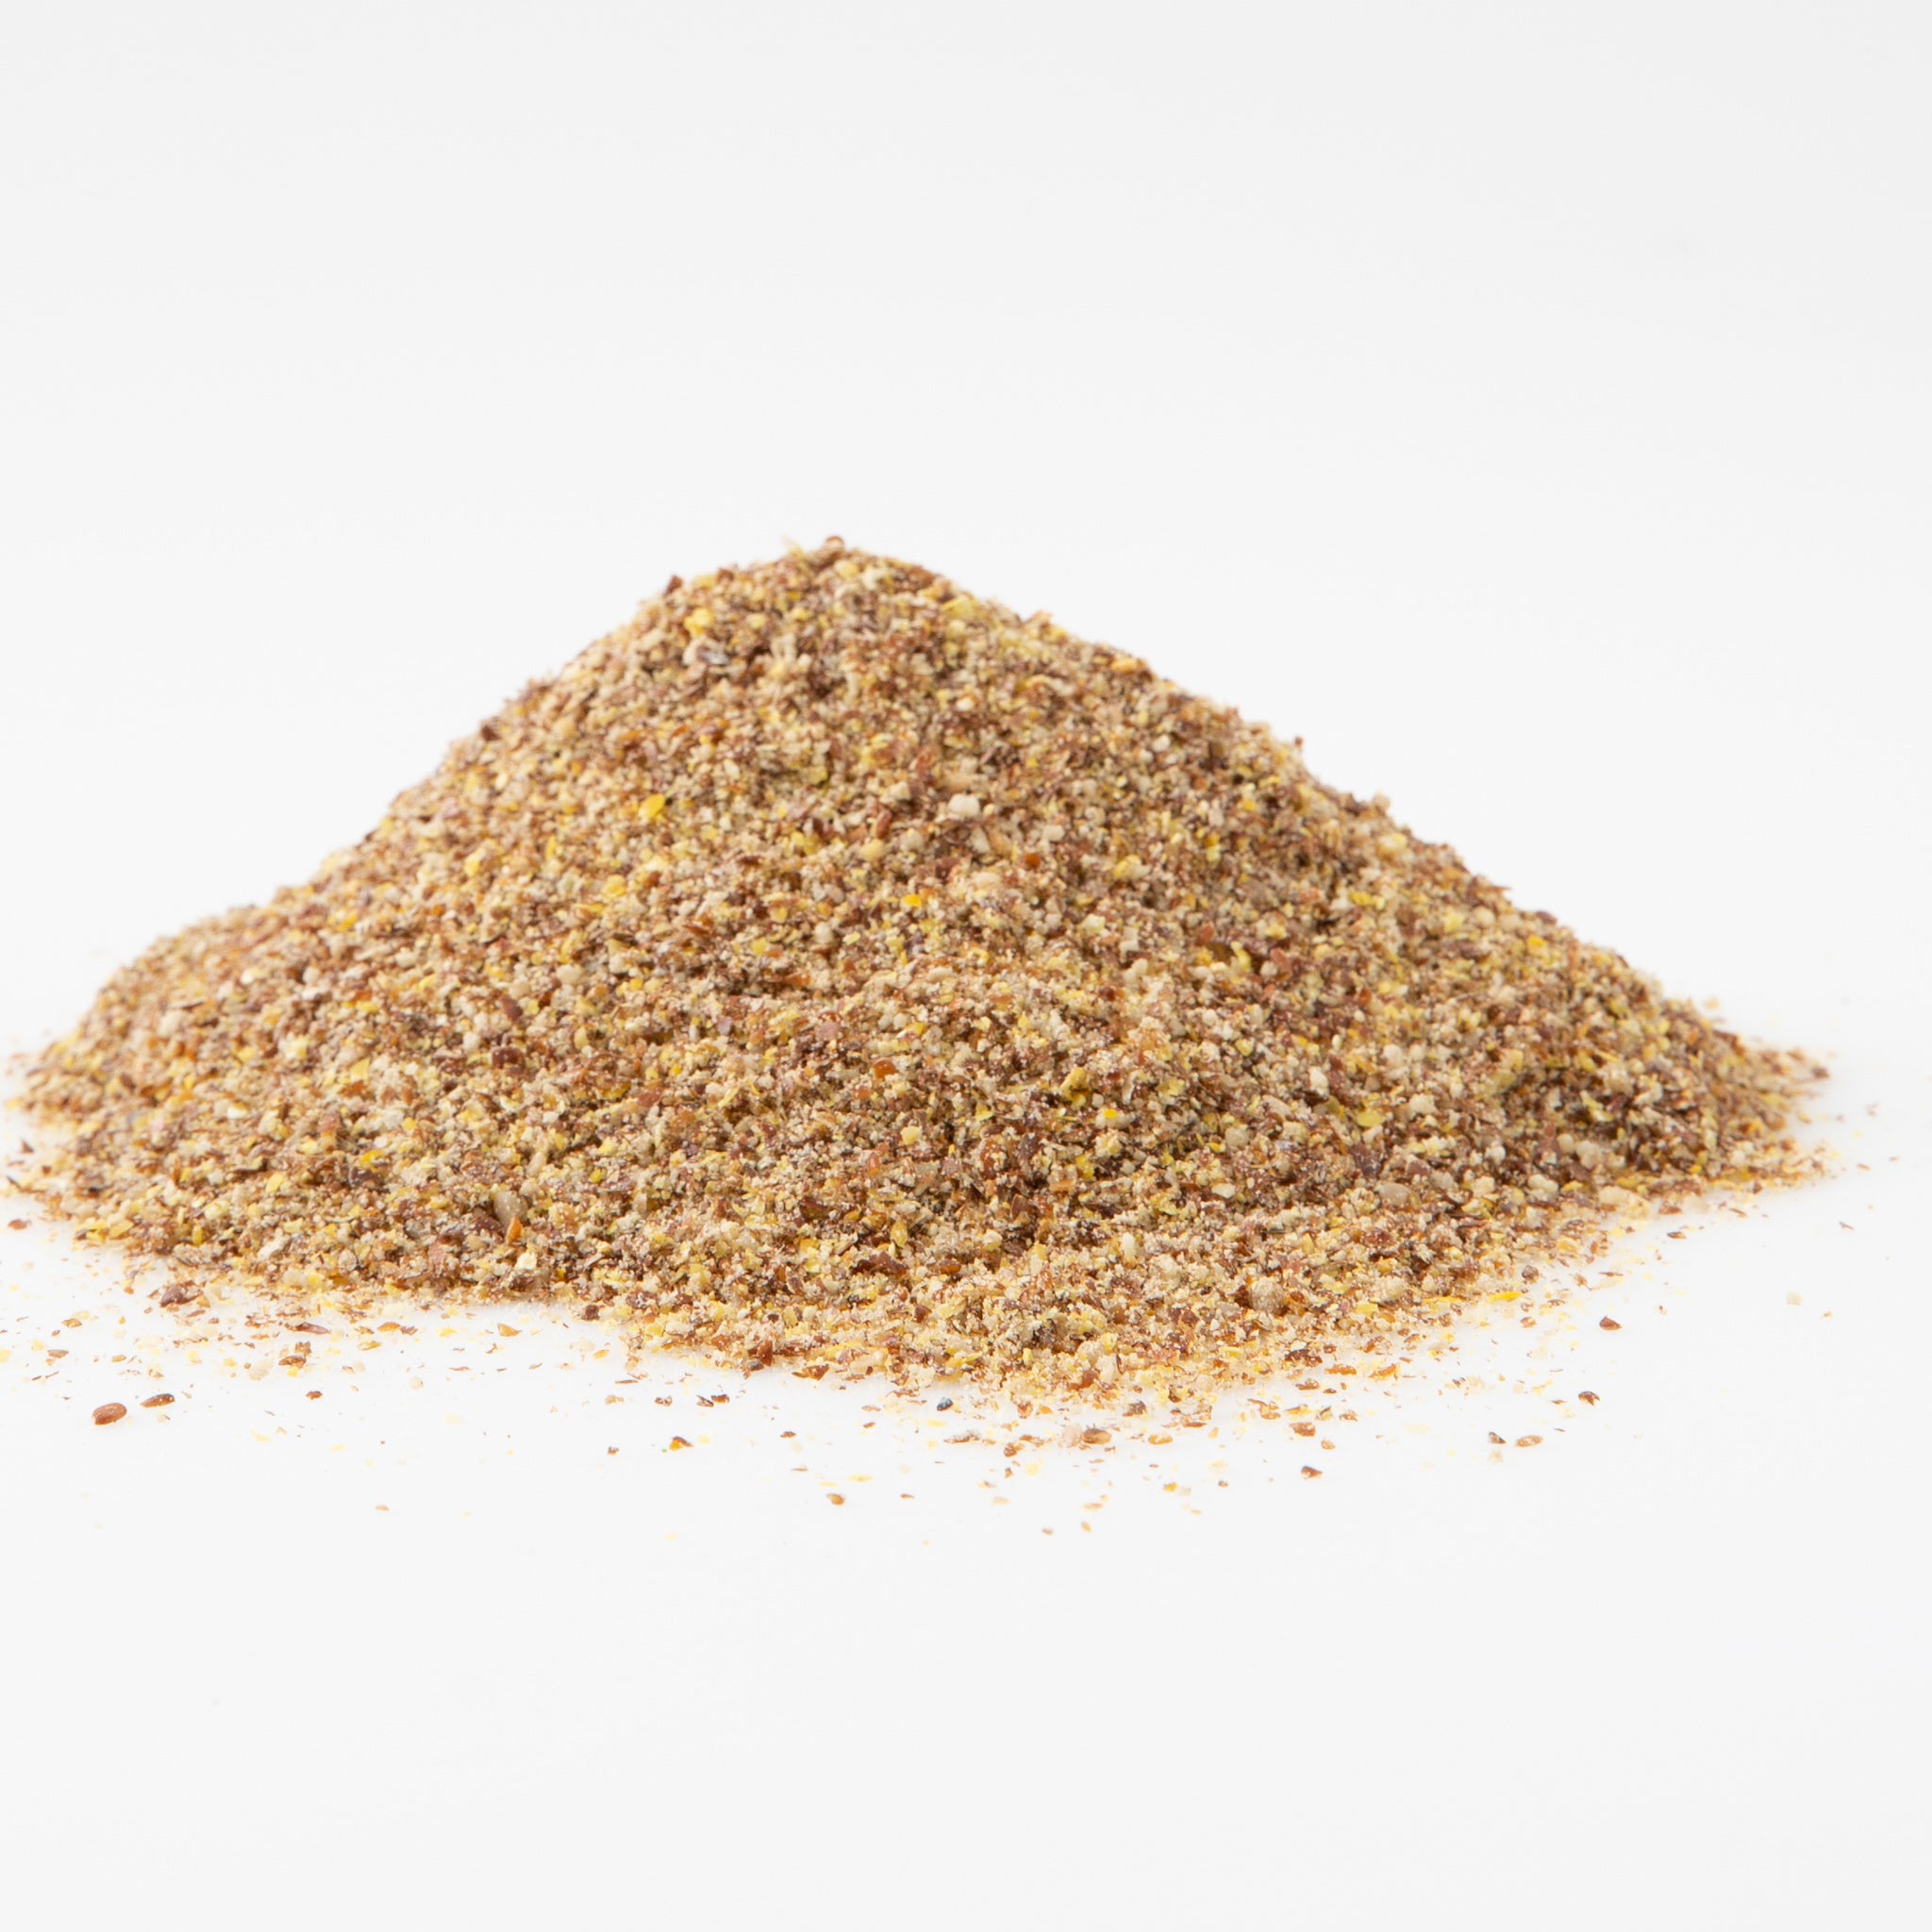 Organic LSA Mix (Cereals) Image 2 - Naked Foods